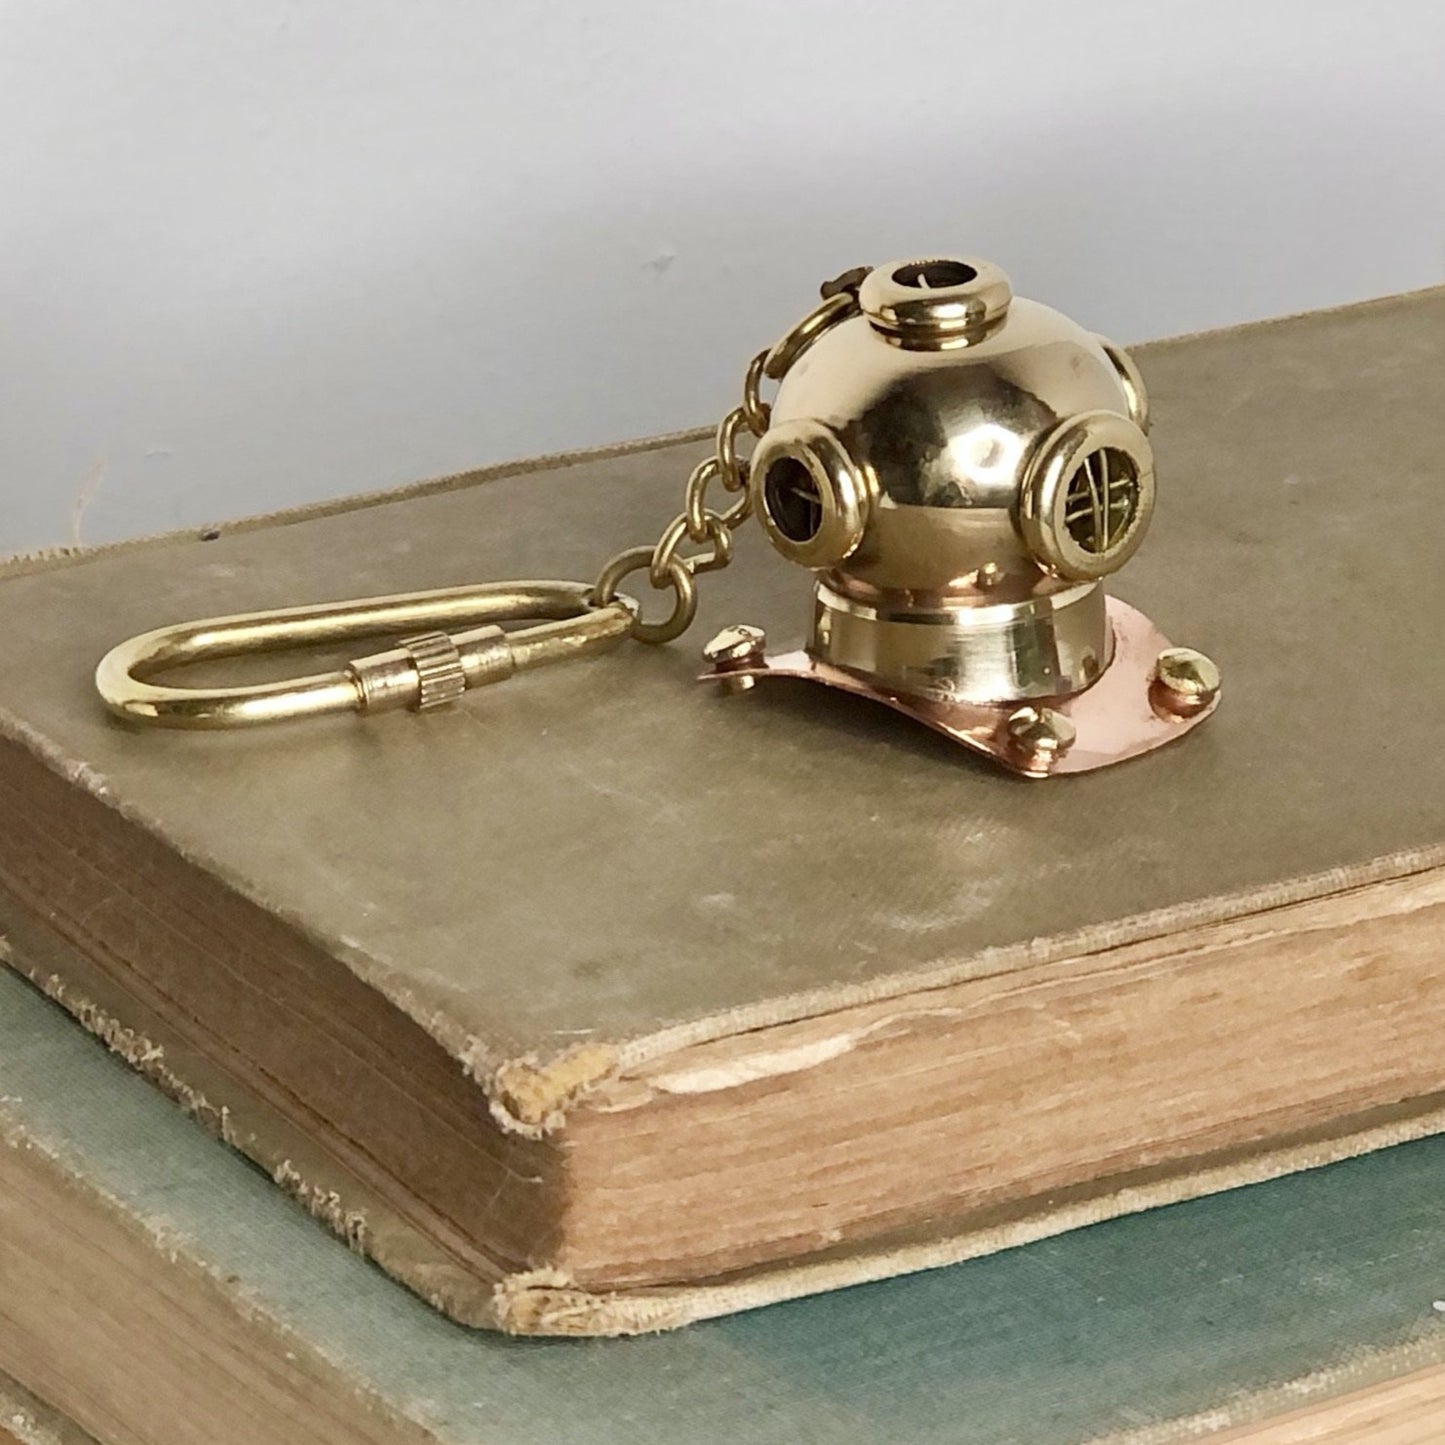 Antique divers helmet brass key chain